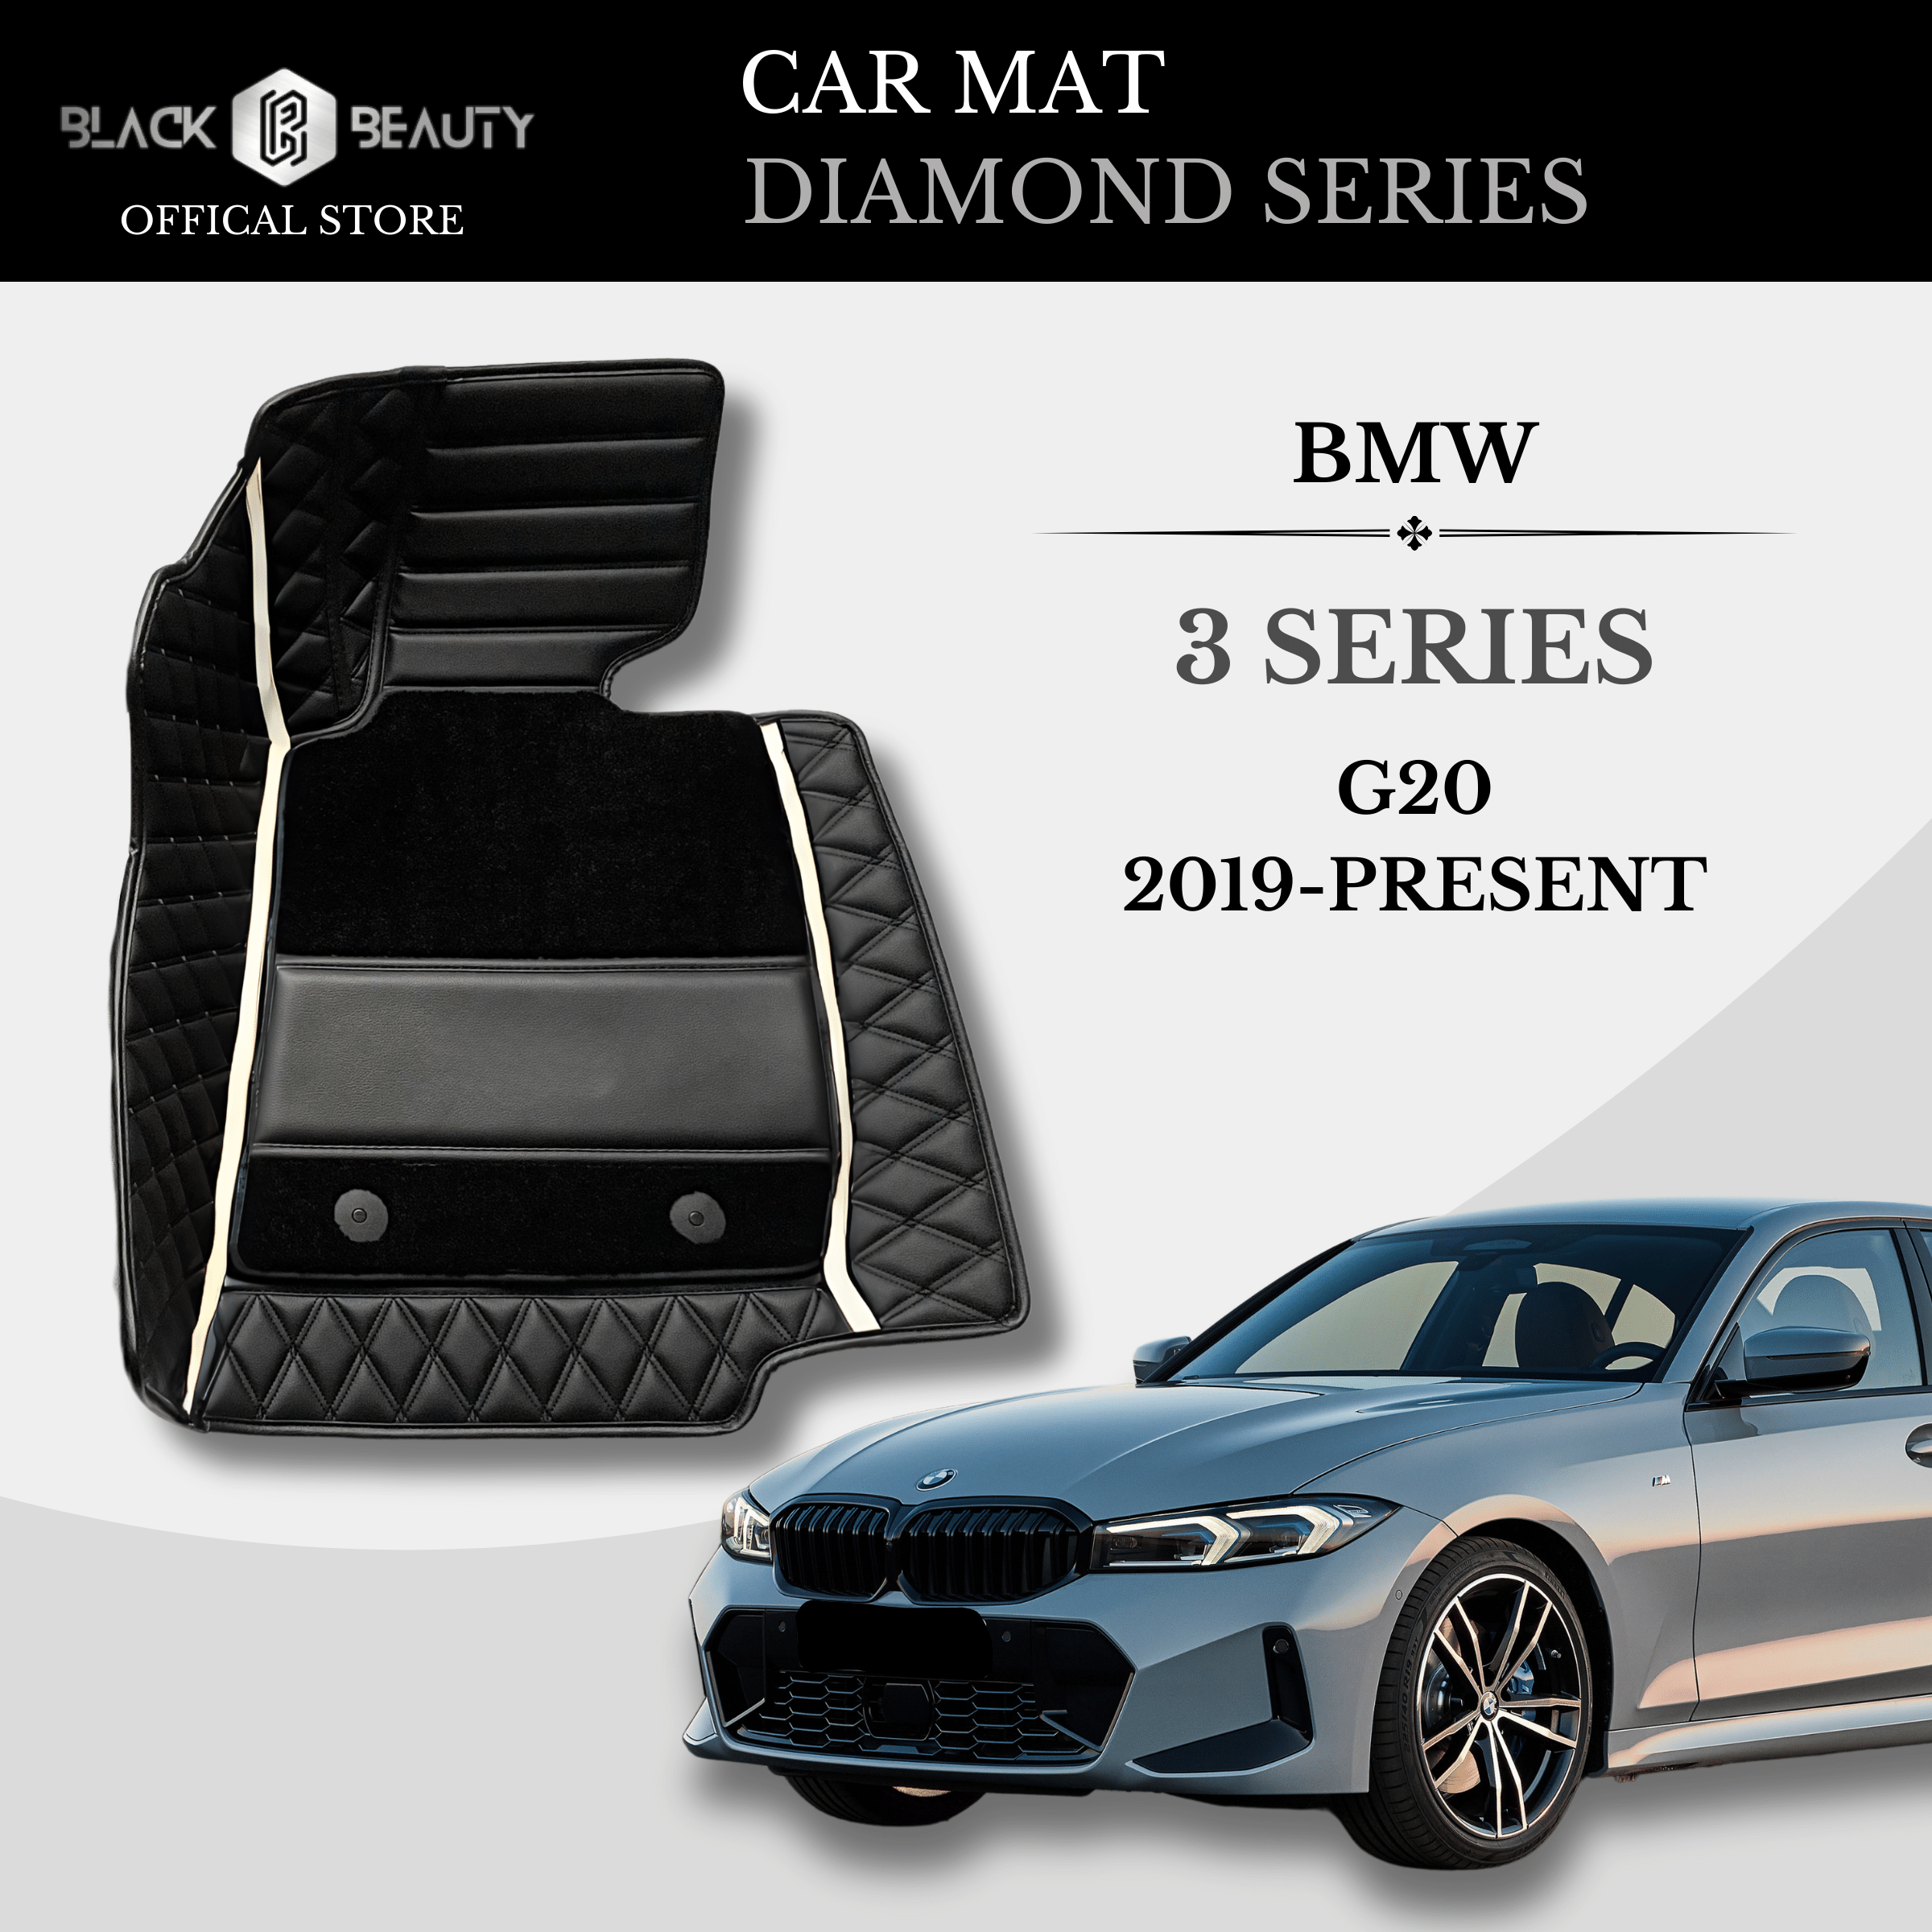 BMW 3 Series G20 (2019-Present) - Diamond Series Car Mat